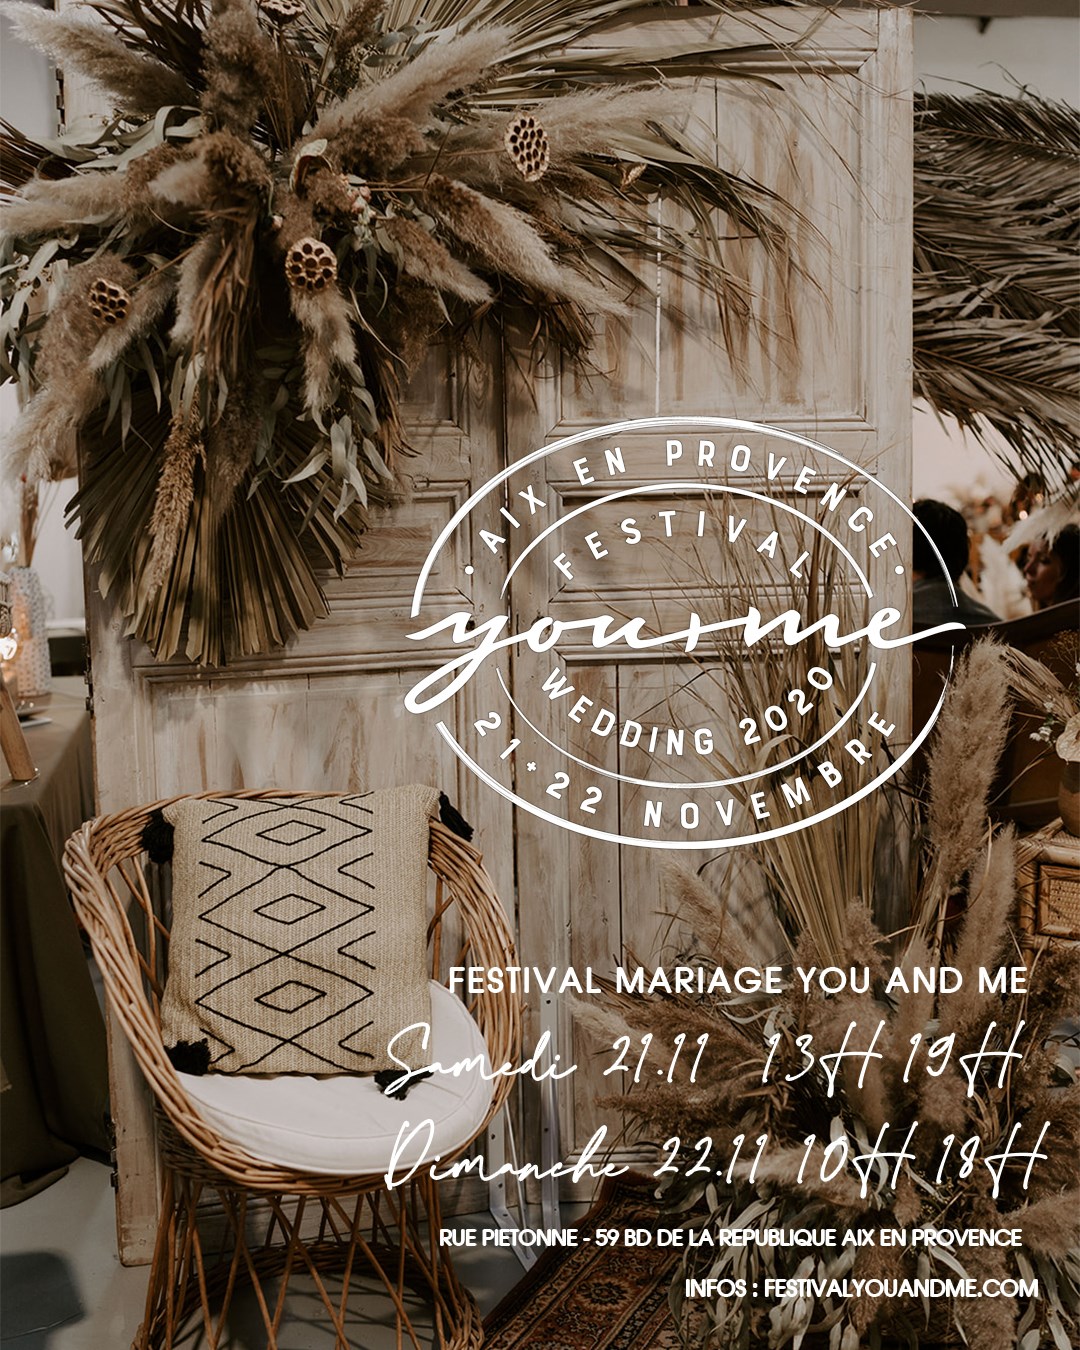 Festival Mariage You and Me 21 + 22 novembre 2020